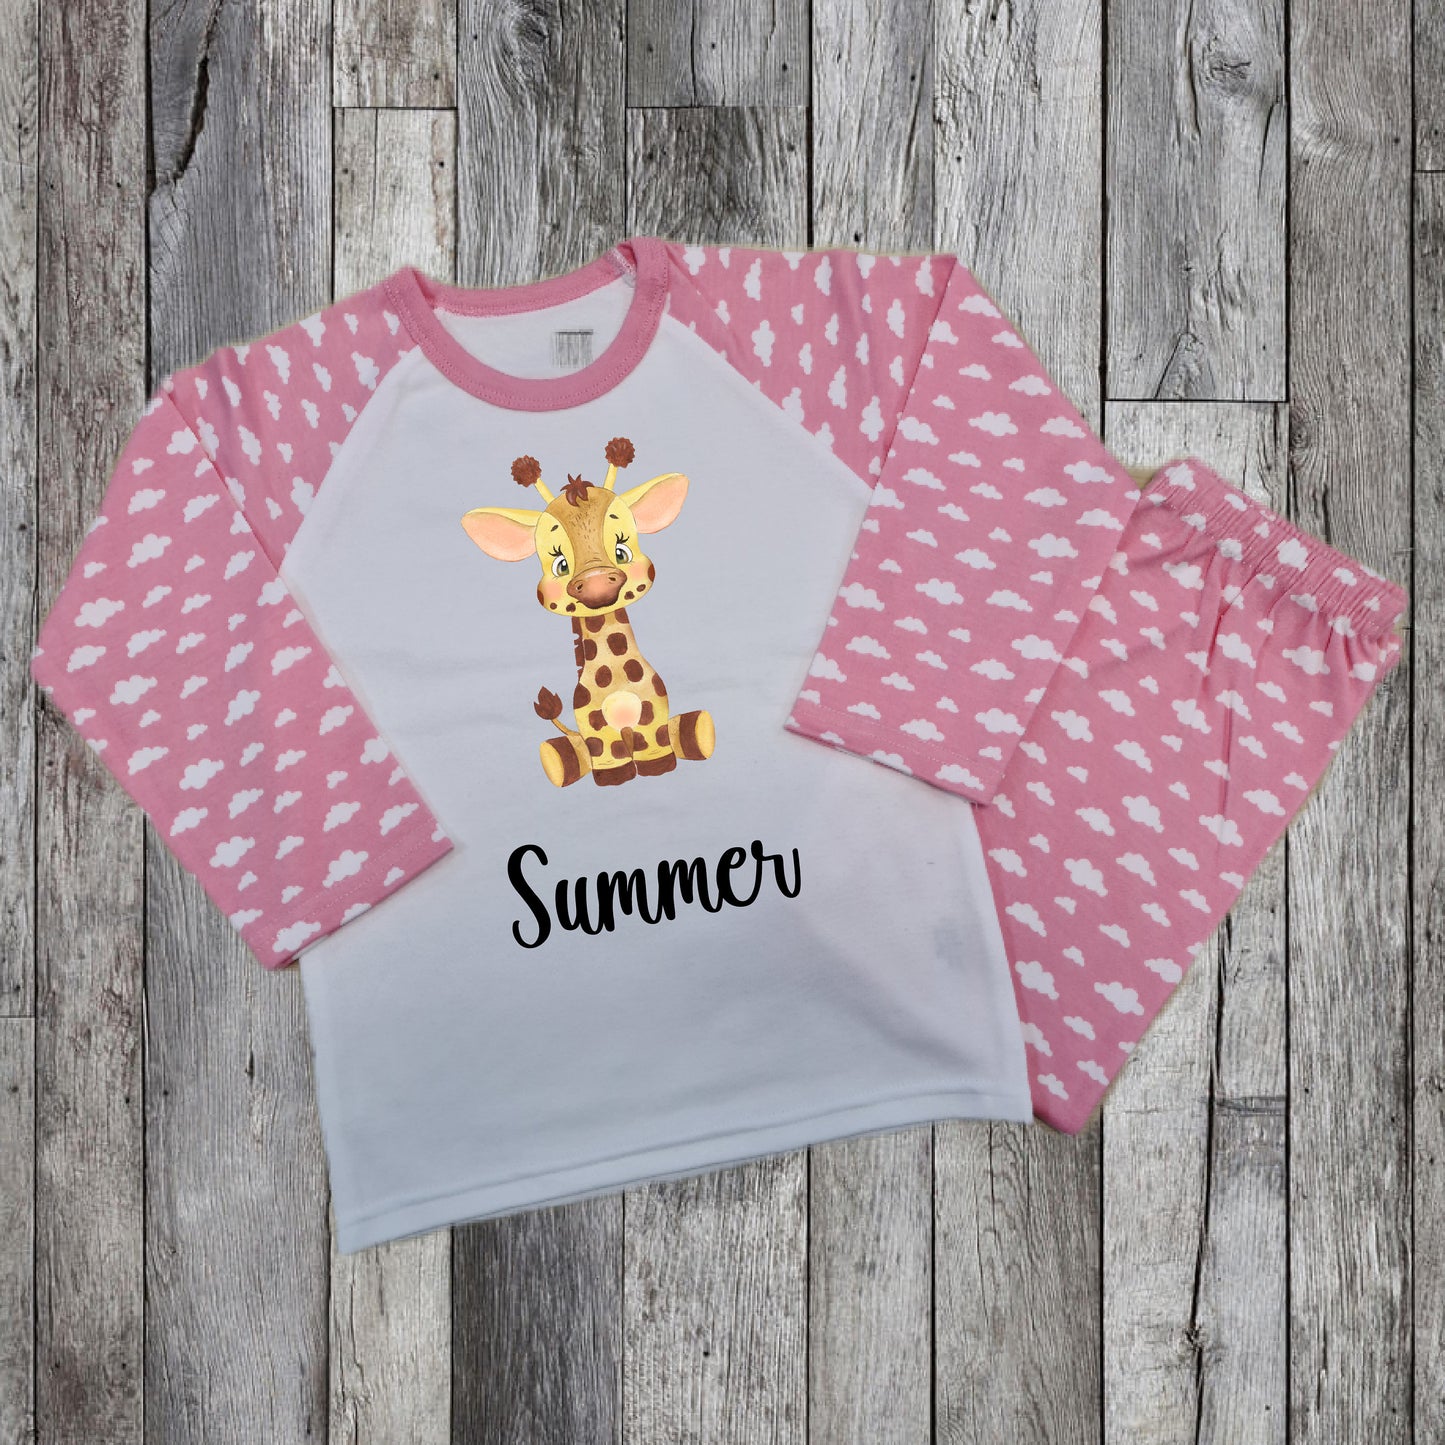 Personalised Baby Giraffe Name Pyjamas - Pink Pyjamas - Custom Made Animal Print PJ'S - Long Sleeve - Clouds - Girls - Cute Print - Custom